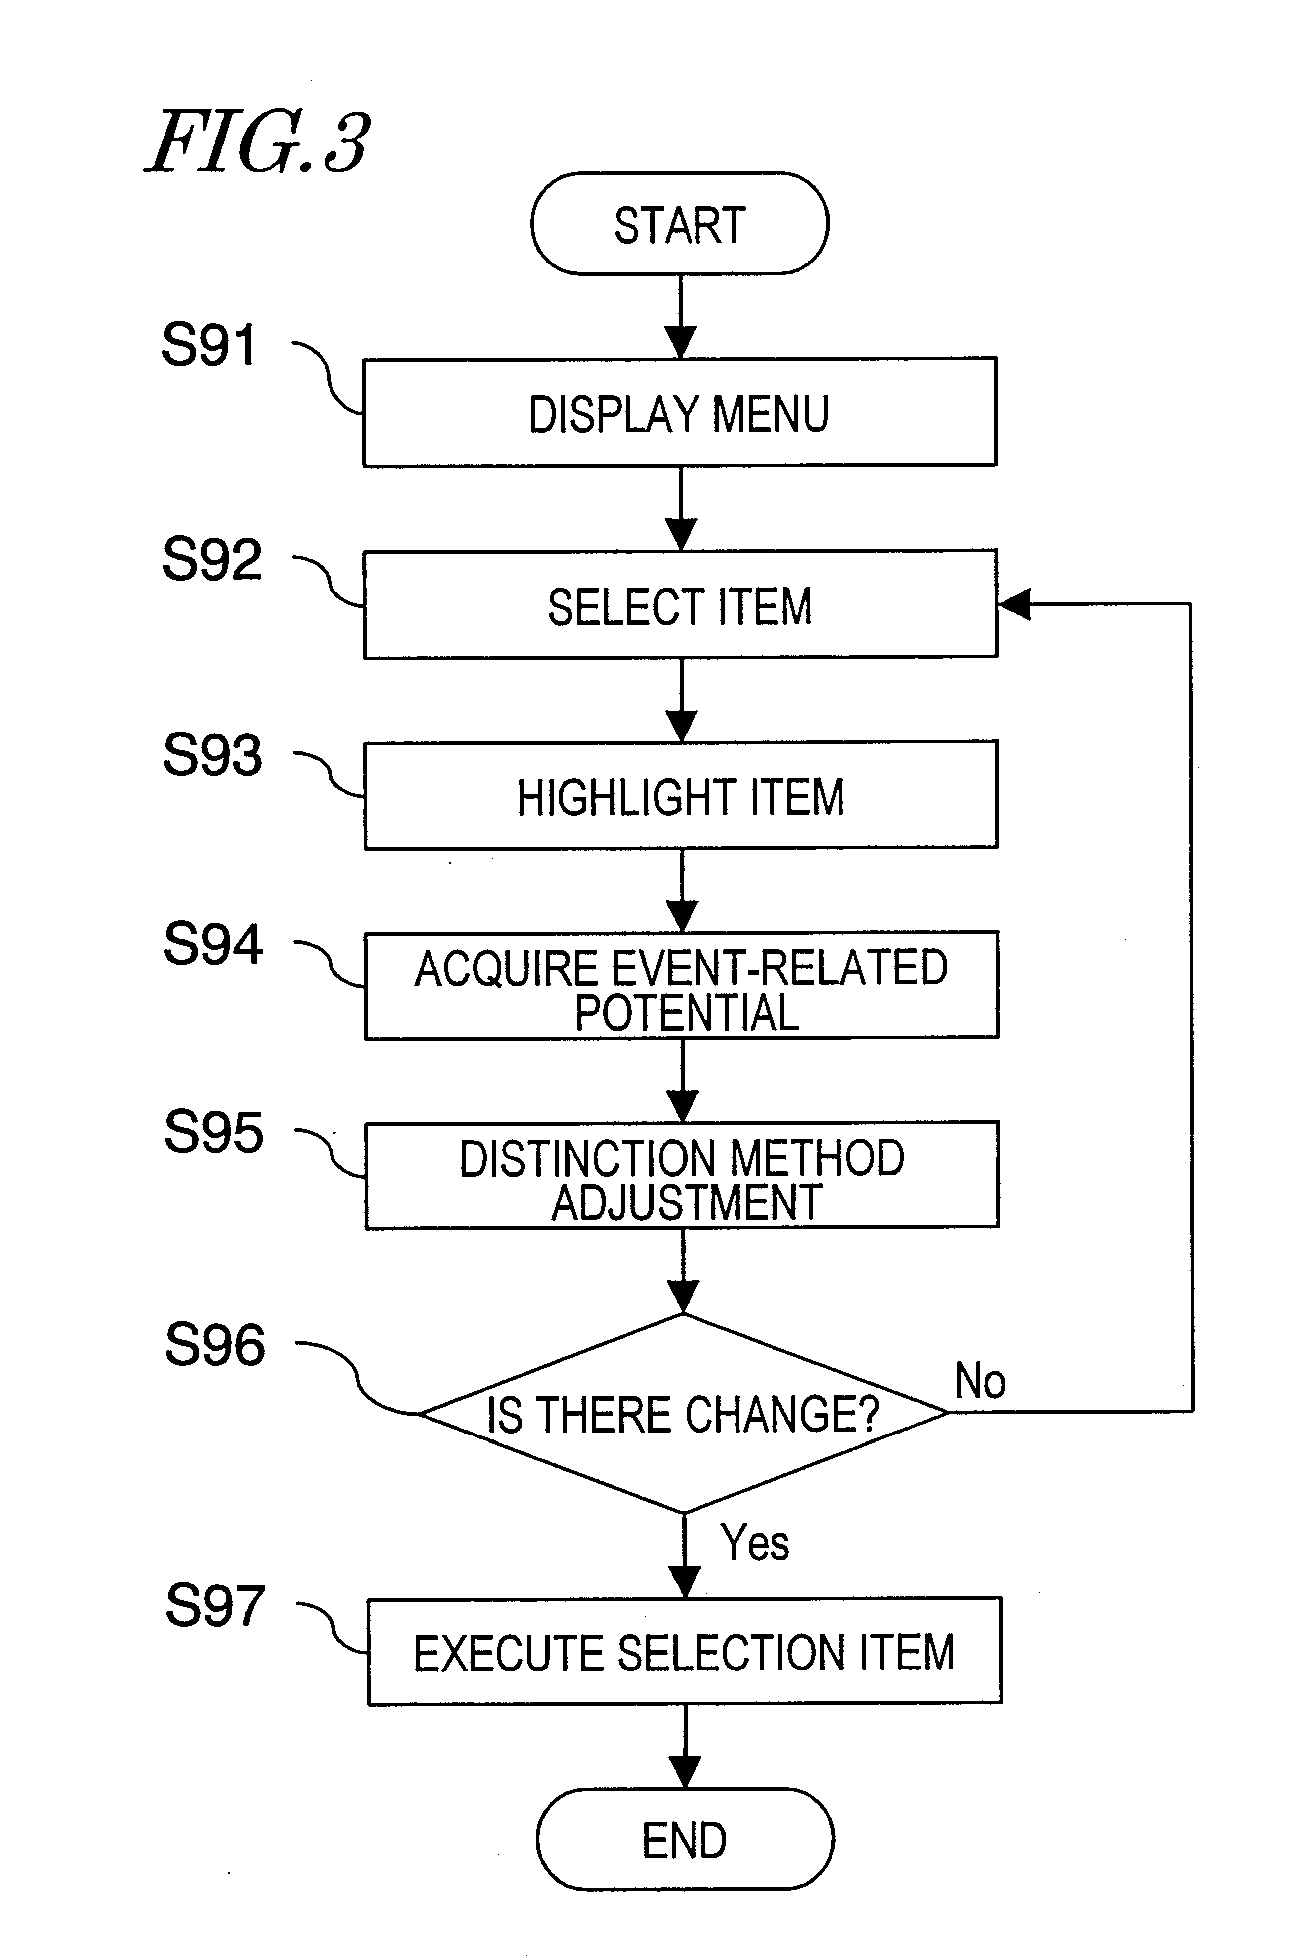 Apparatus, method, and computer program for adjustment of electroencephalograms distinction method